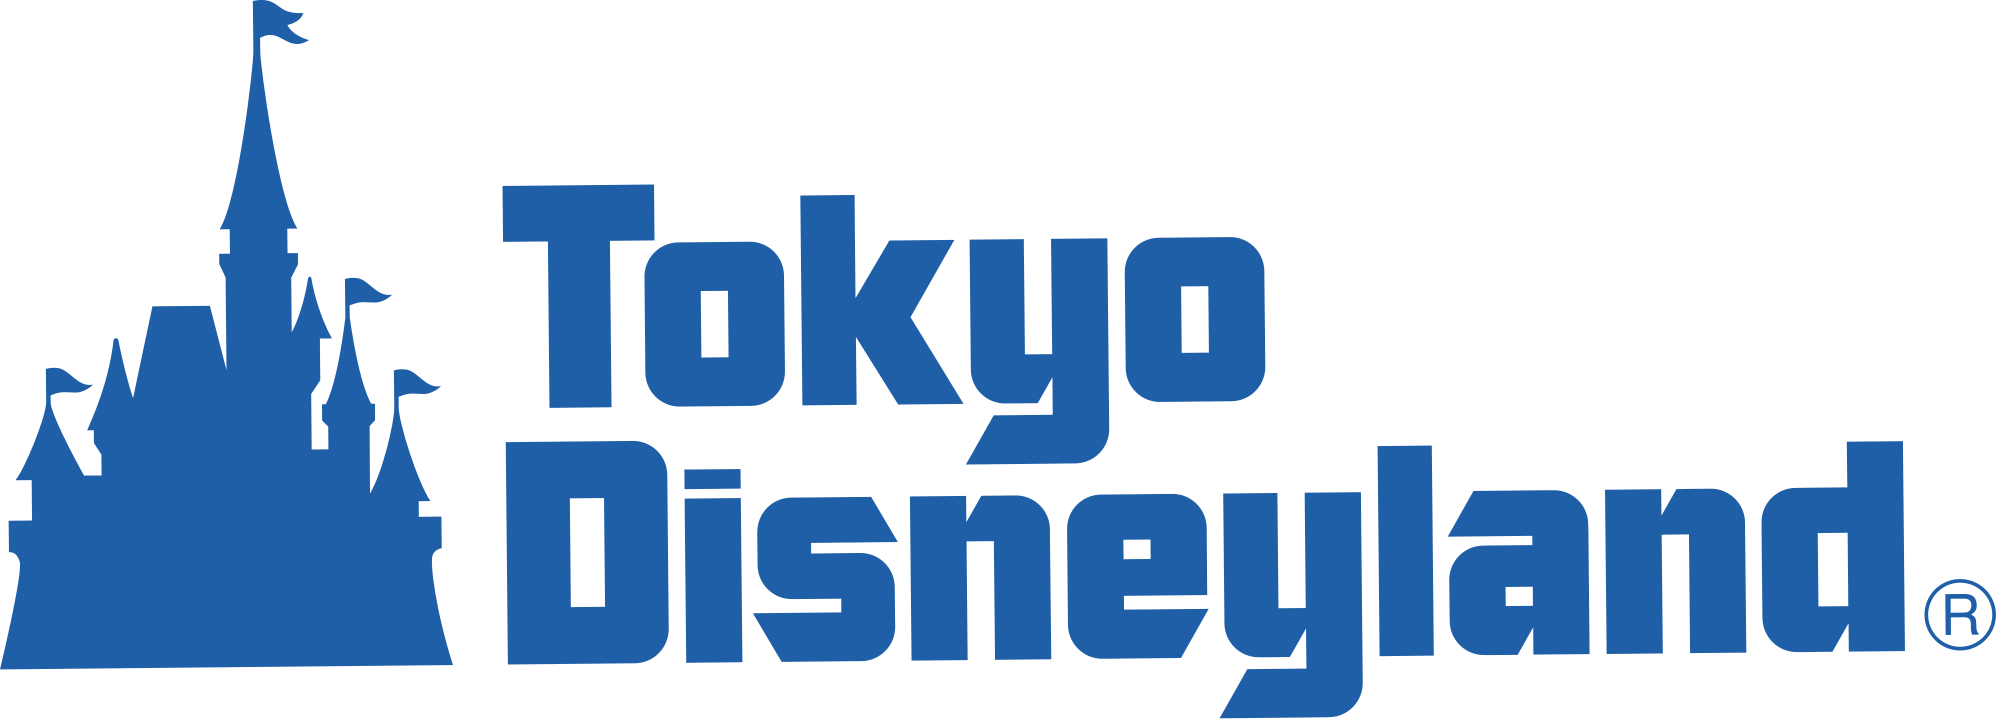 Tokyo Logo PNG High-Quality Image